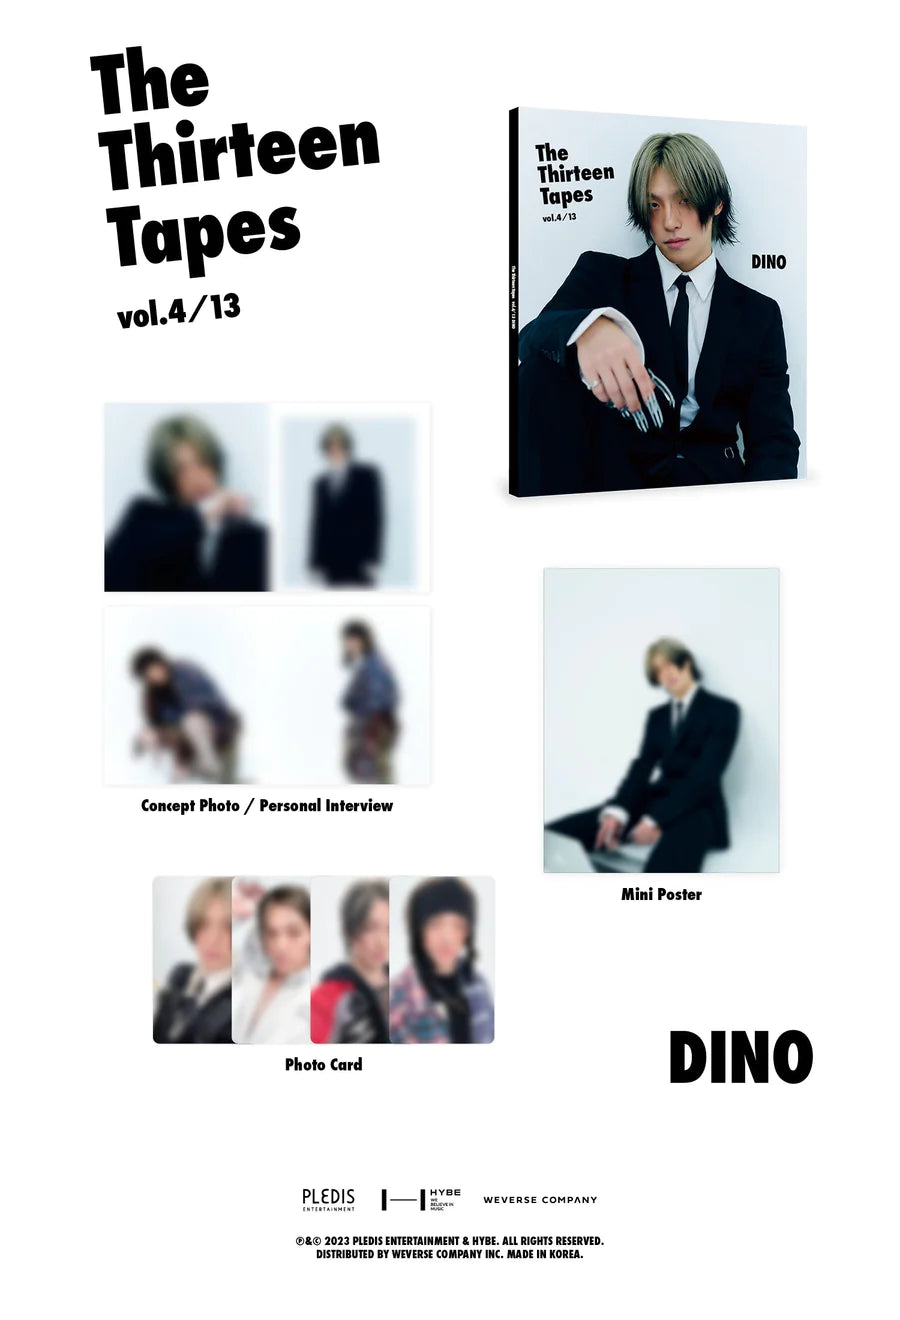 DINO (SEVENTEEN) The Thirteen Tapes